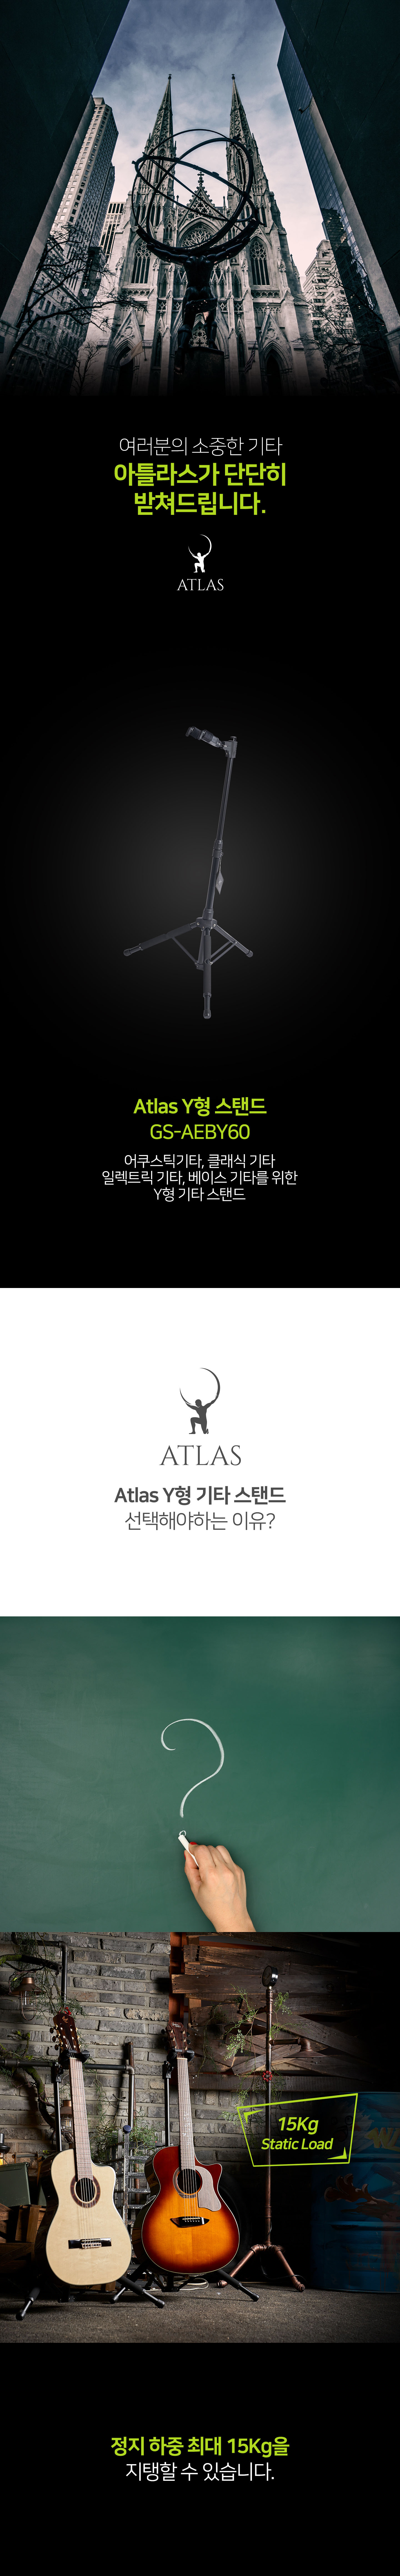 Atlas_GS-AEBY60_A_173408.jpg